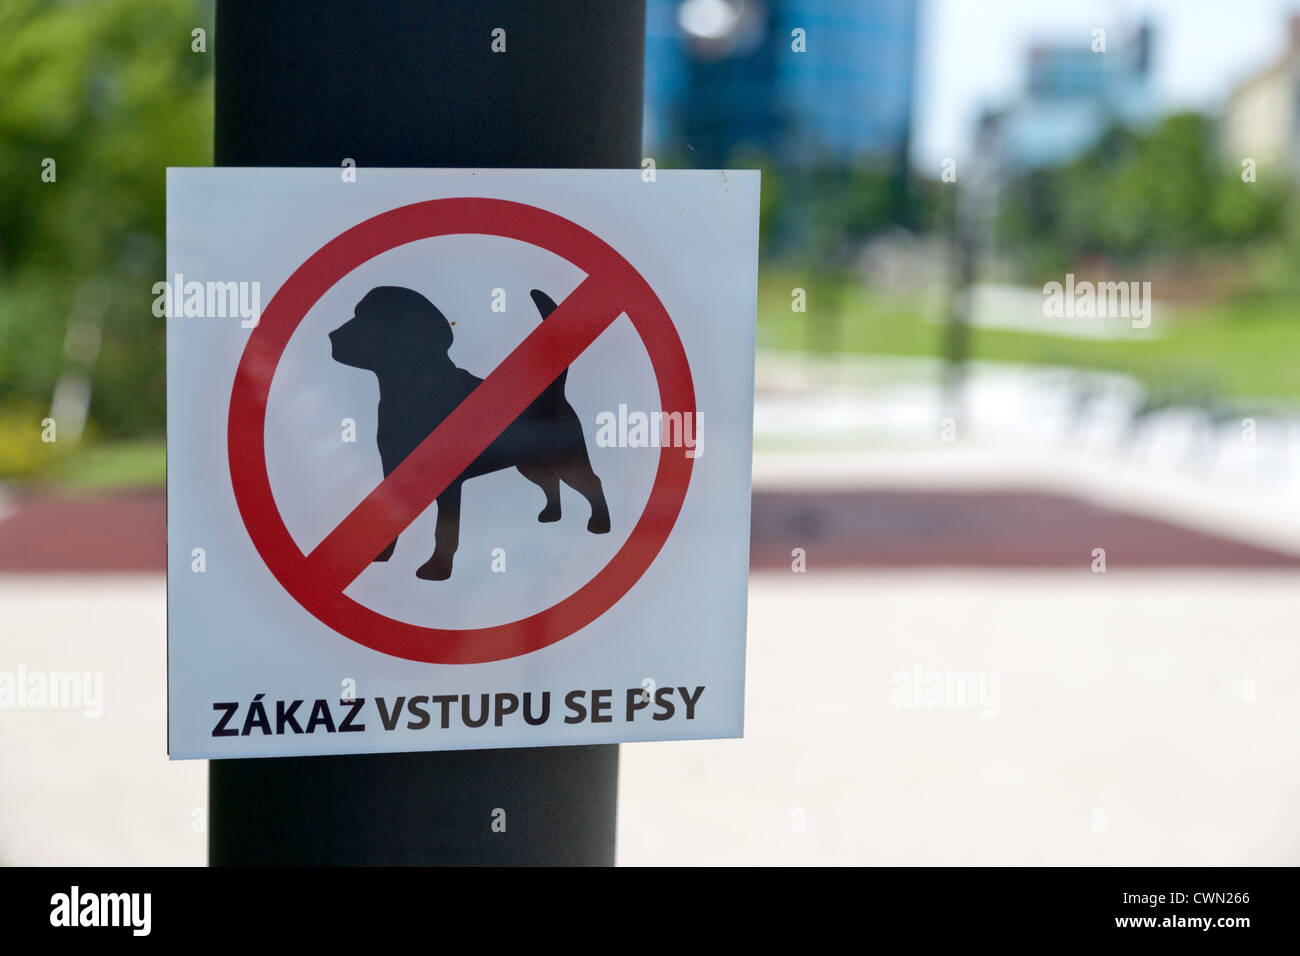 Hunde verboten - Verbotszeichen, Praha, Ceska republika Stockfotografie -  Alamy